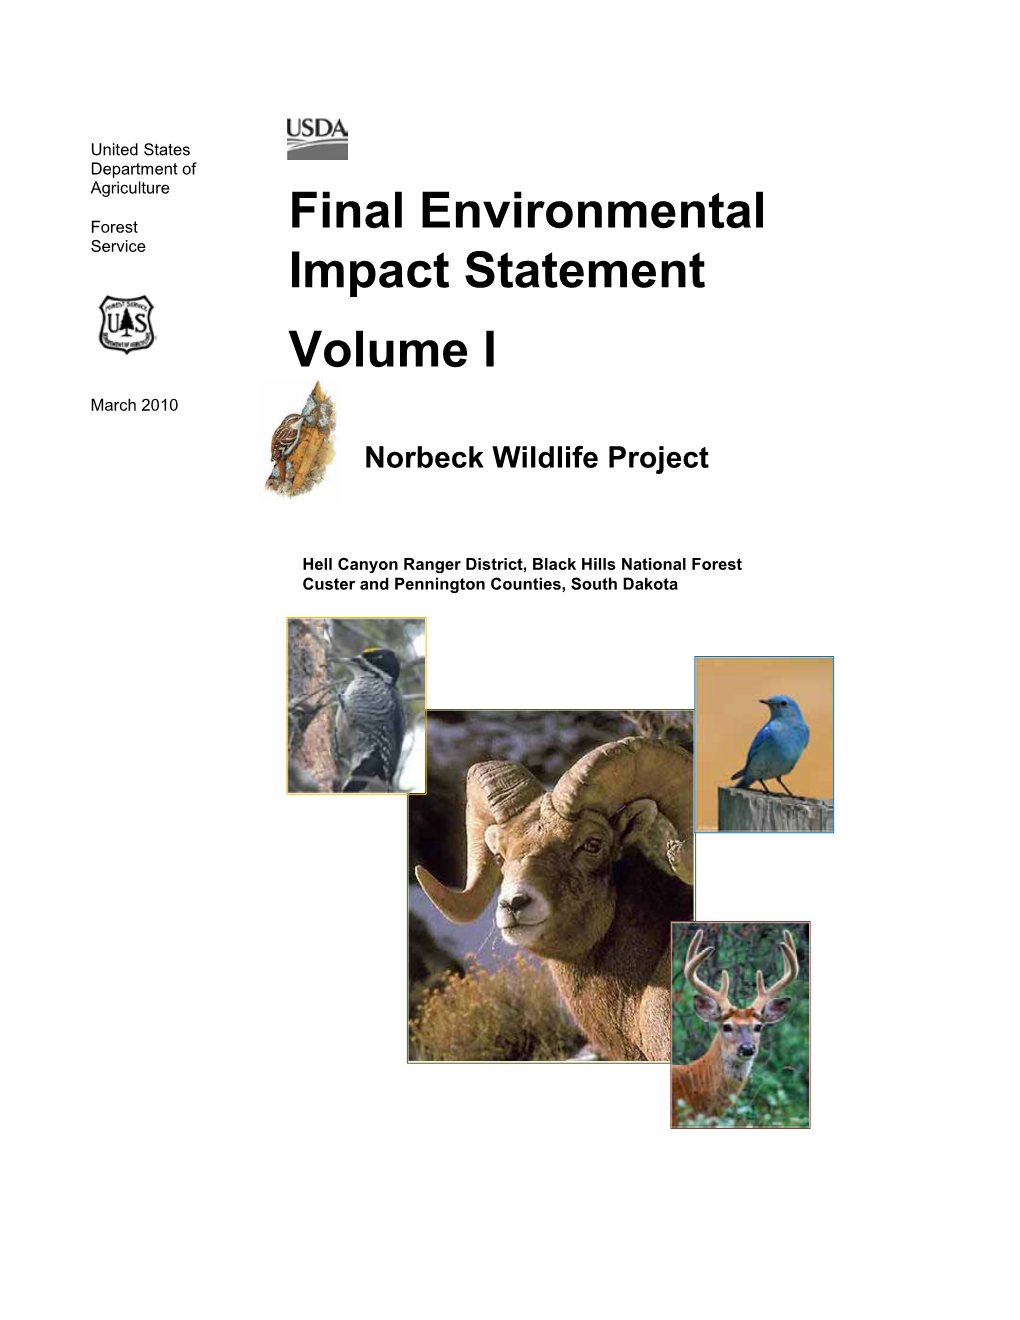 Final Environmental Impact Statement Volume I Norbeck